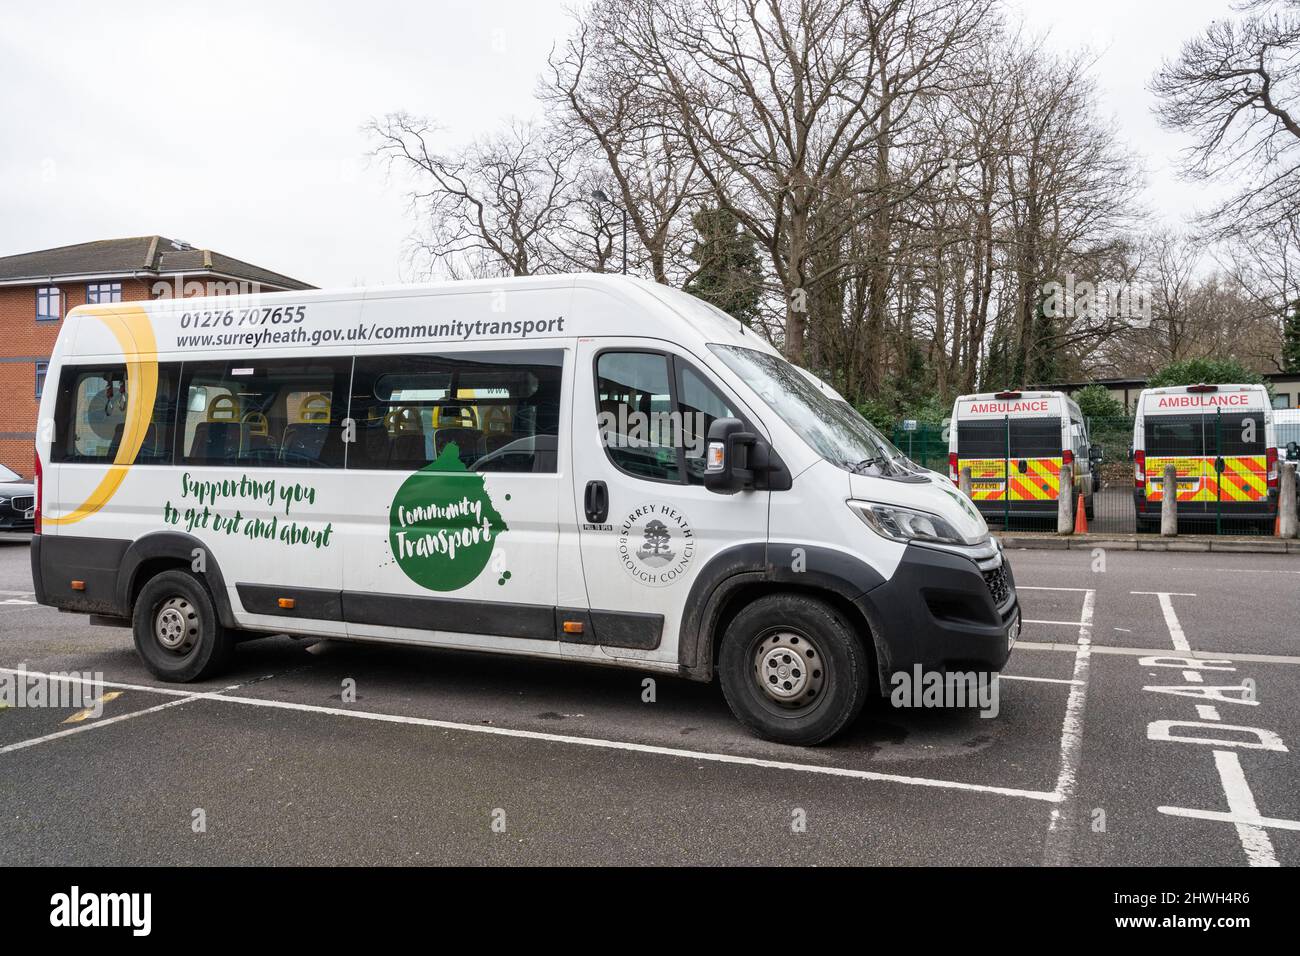 Community transport minibus parked near Surrey Heath council offices, England, UK Stock Photo